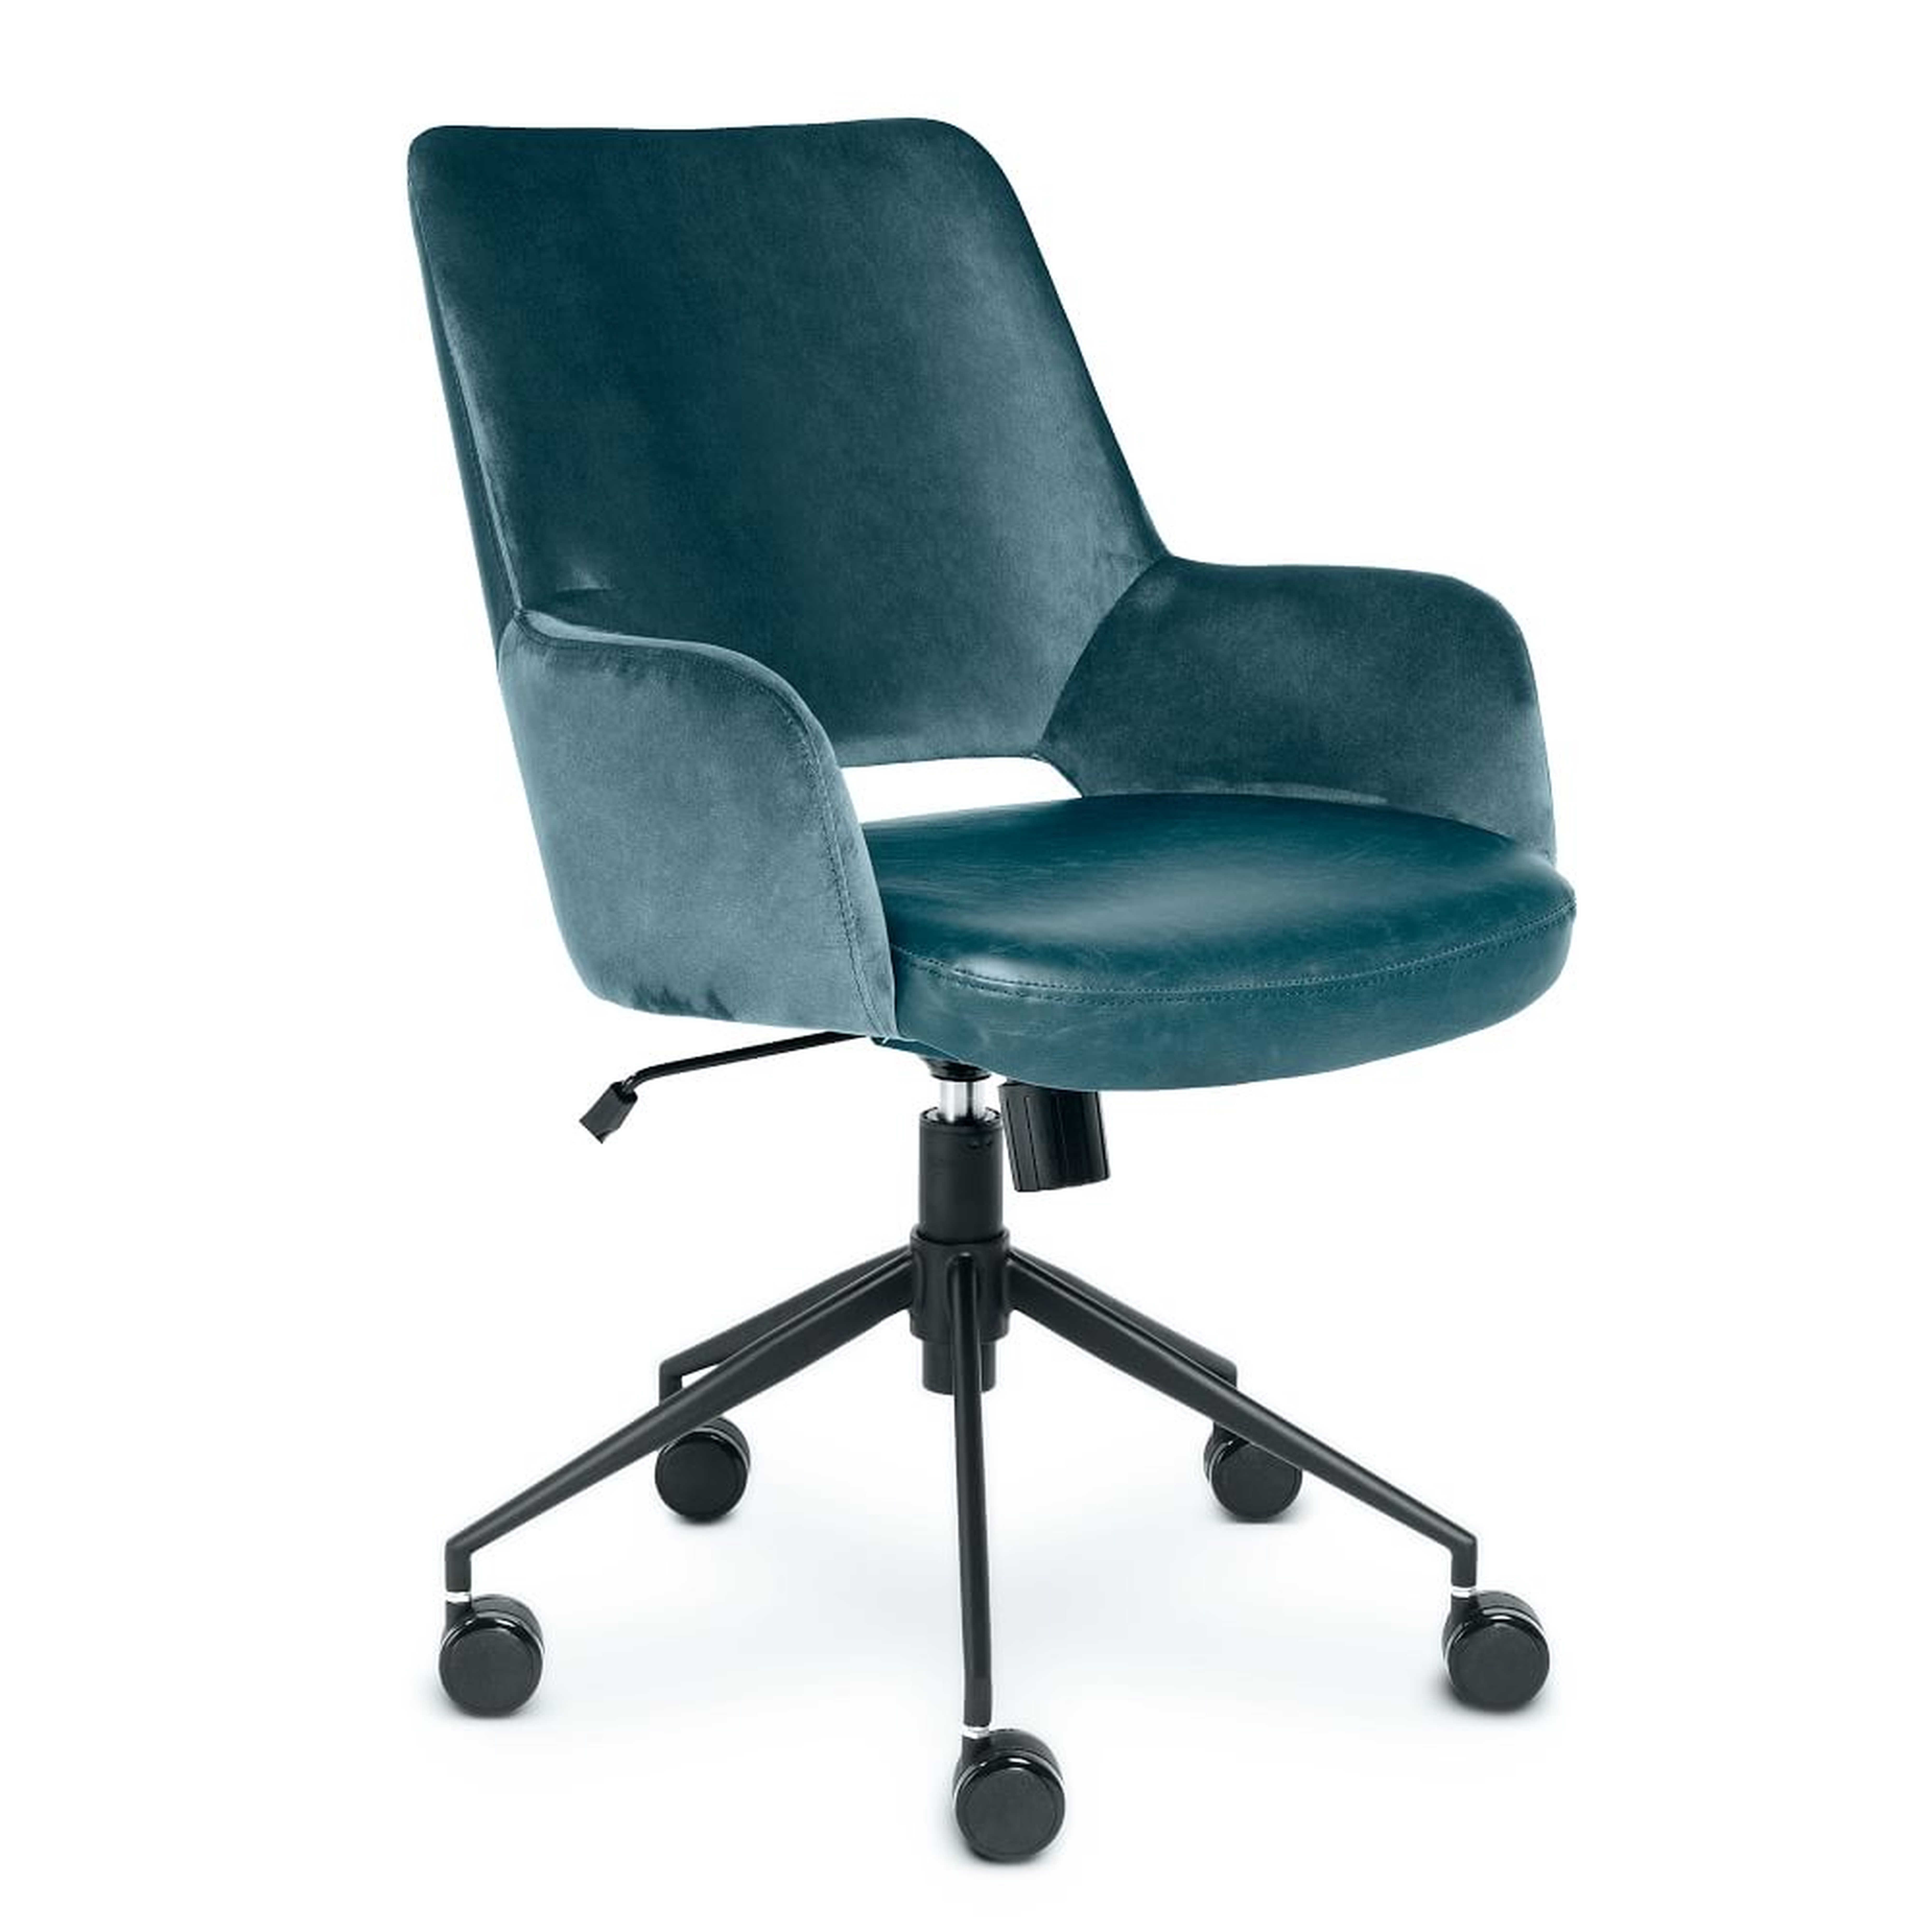 Two-Toned Upholstered Tilt Office Chair, Blue - West Elm